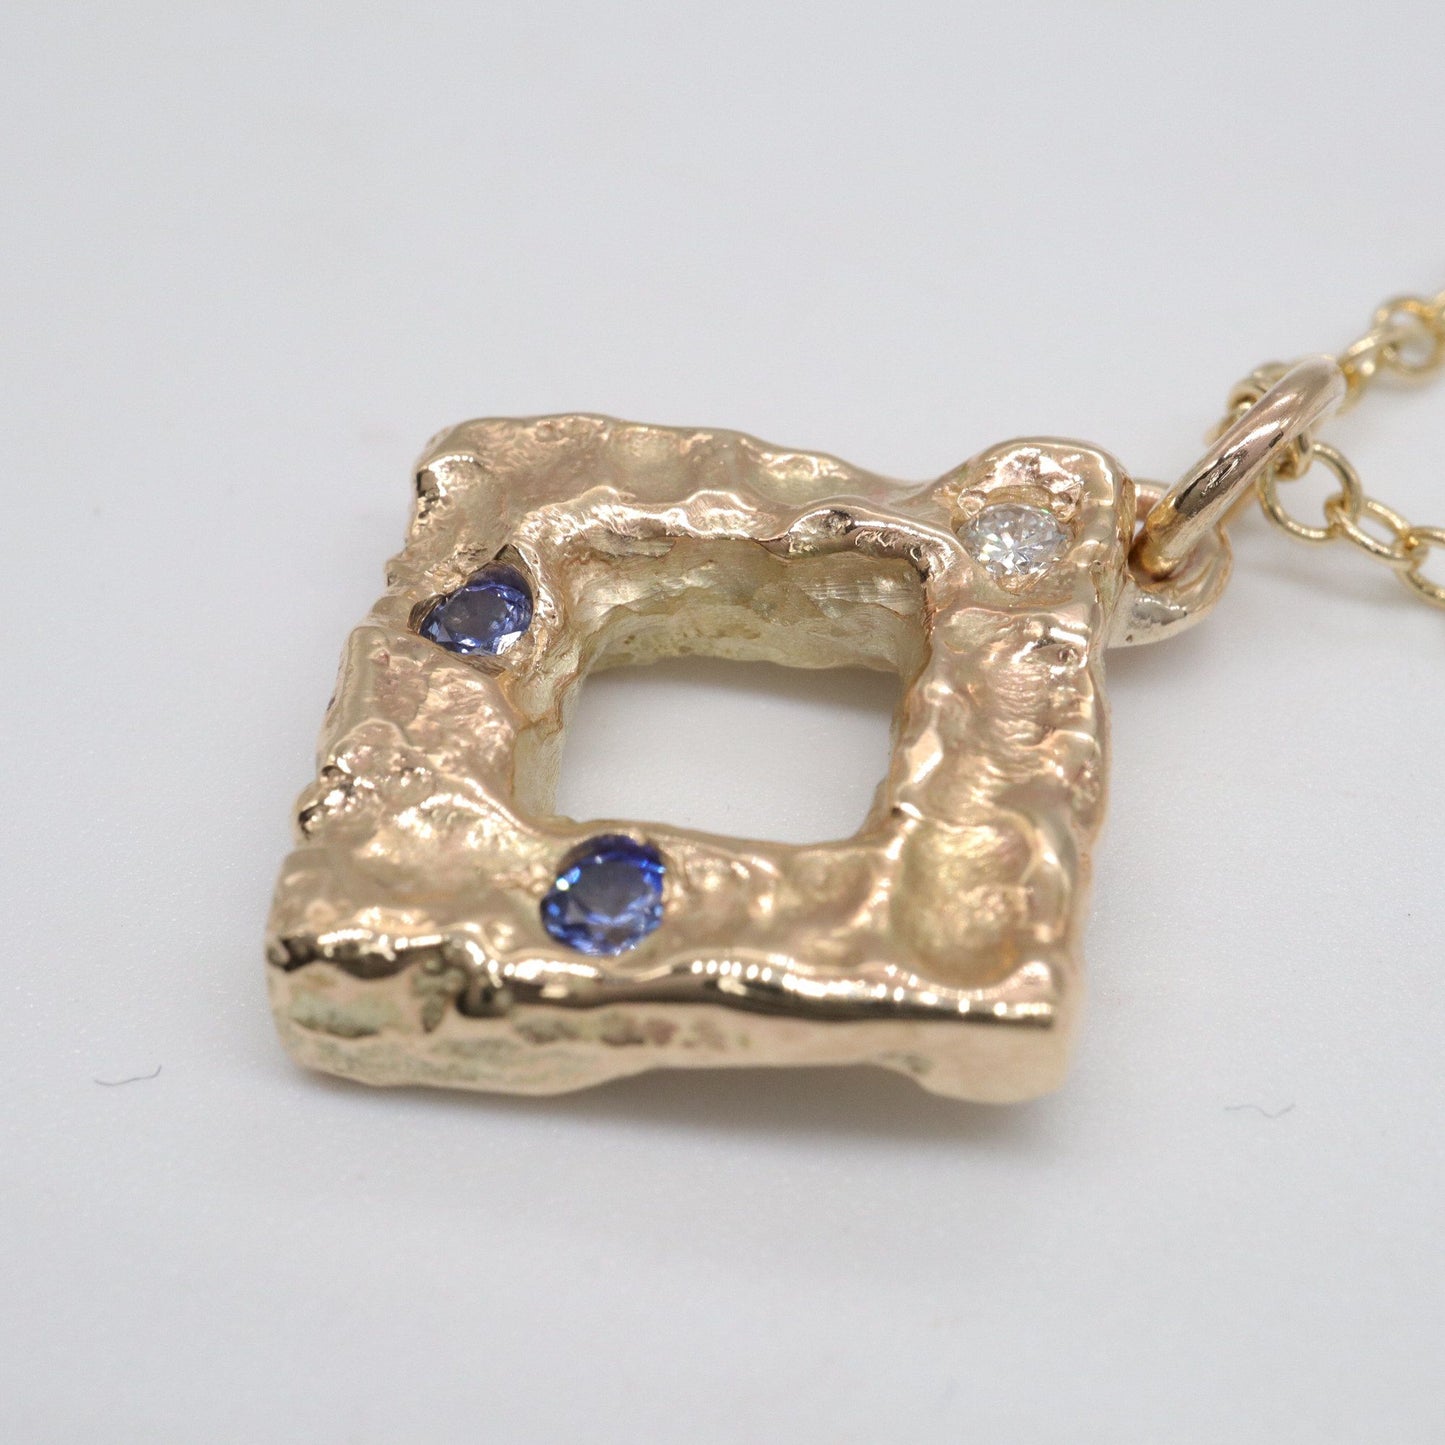 Sapphire & diamond pendant - Fells and Lakes limited edition range